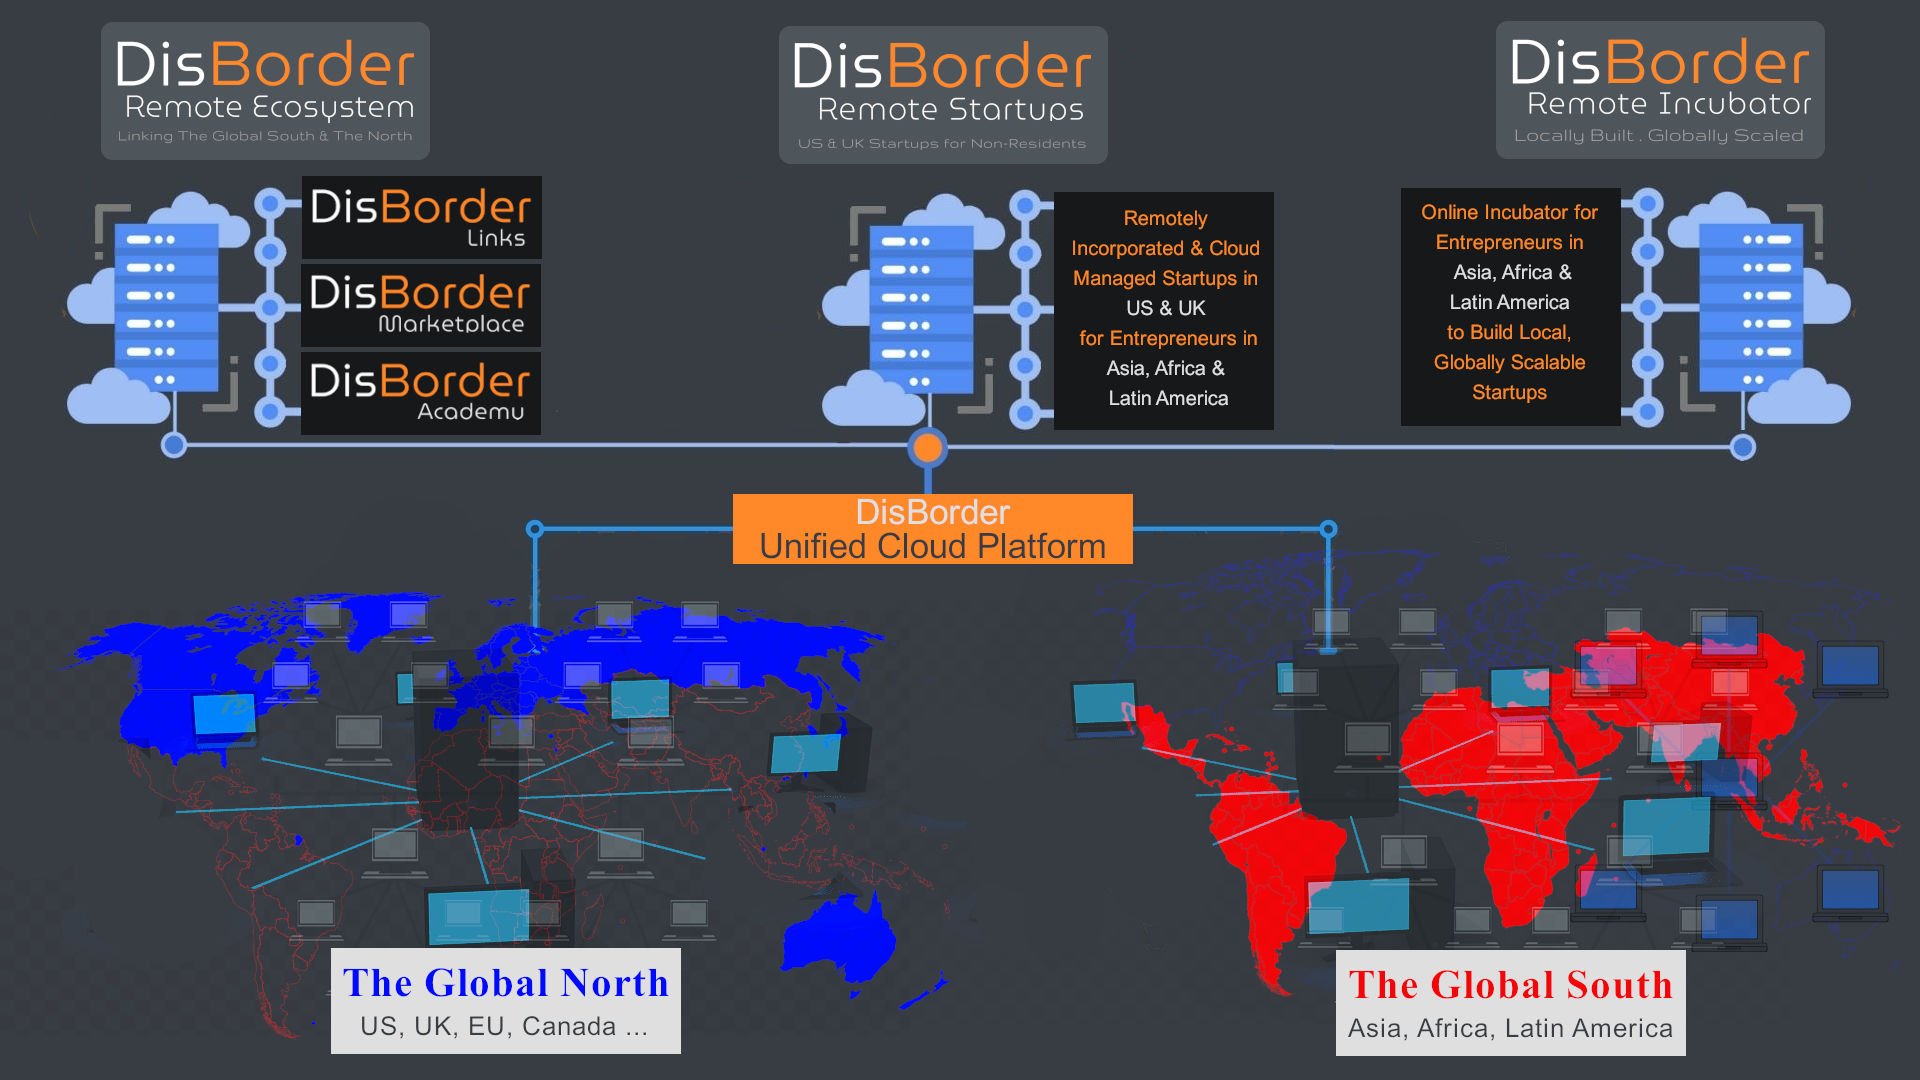 Find detailed information about DisBorder